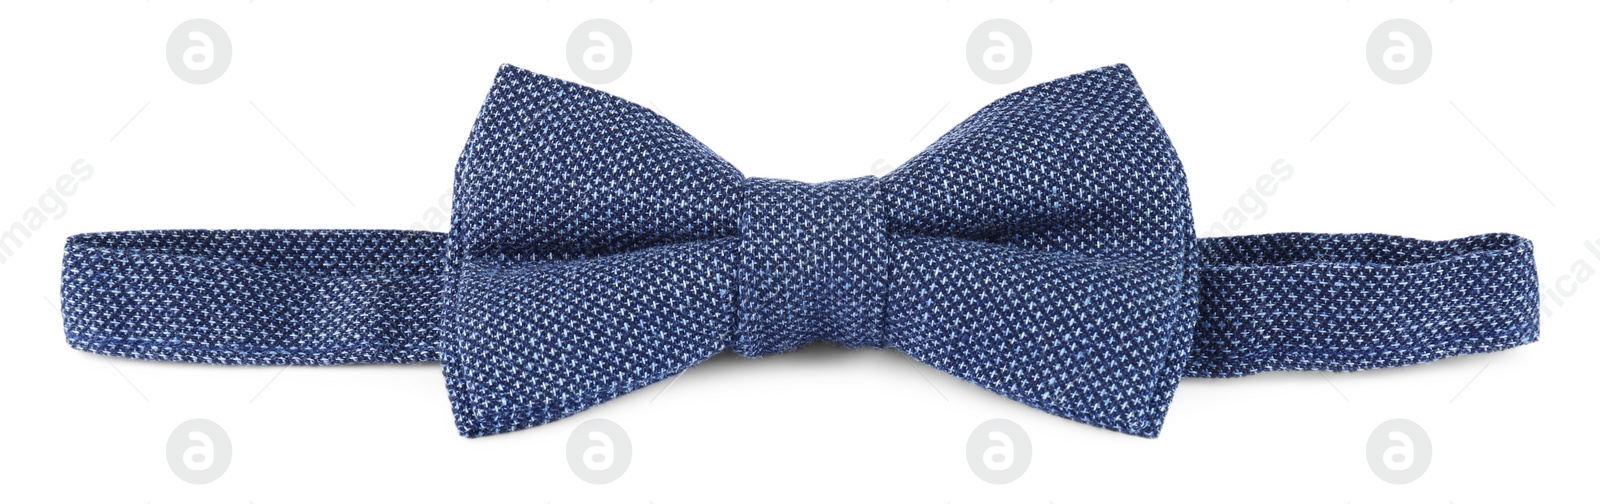 Photo of Stylish blue bow tie isolated on white